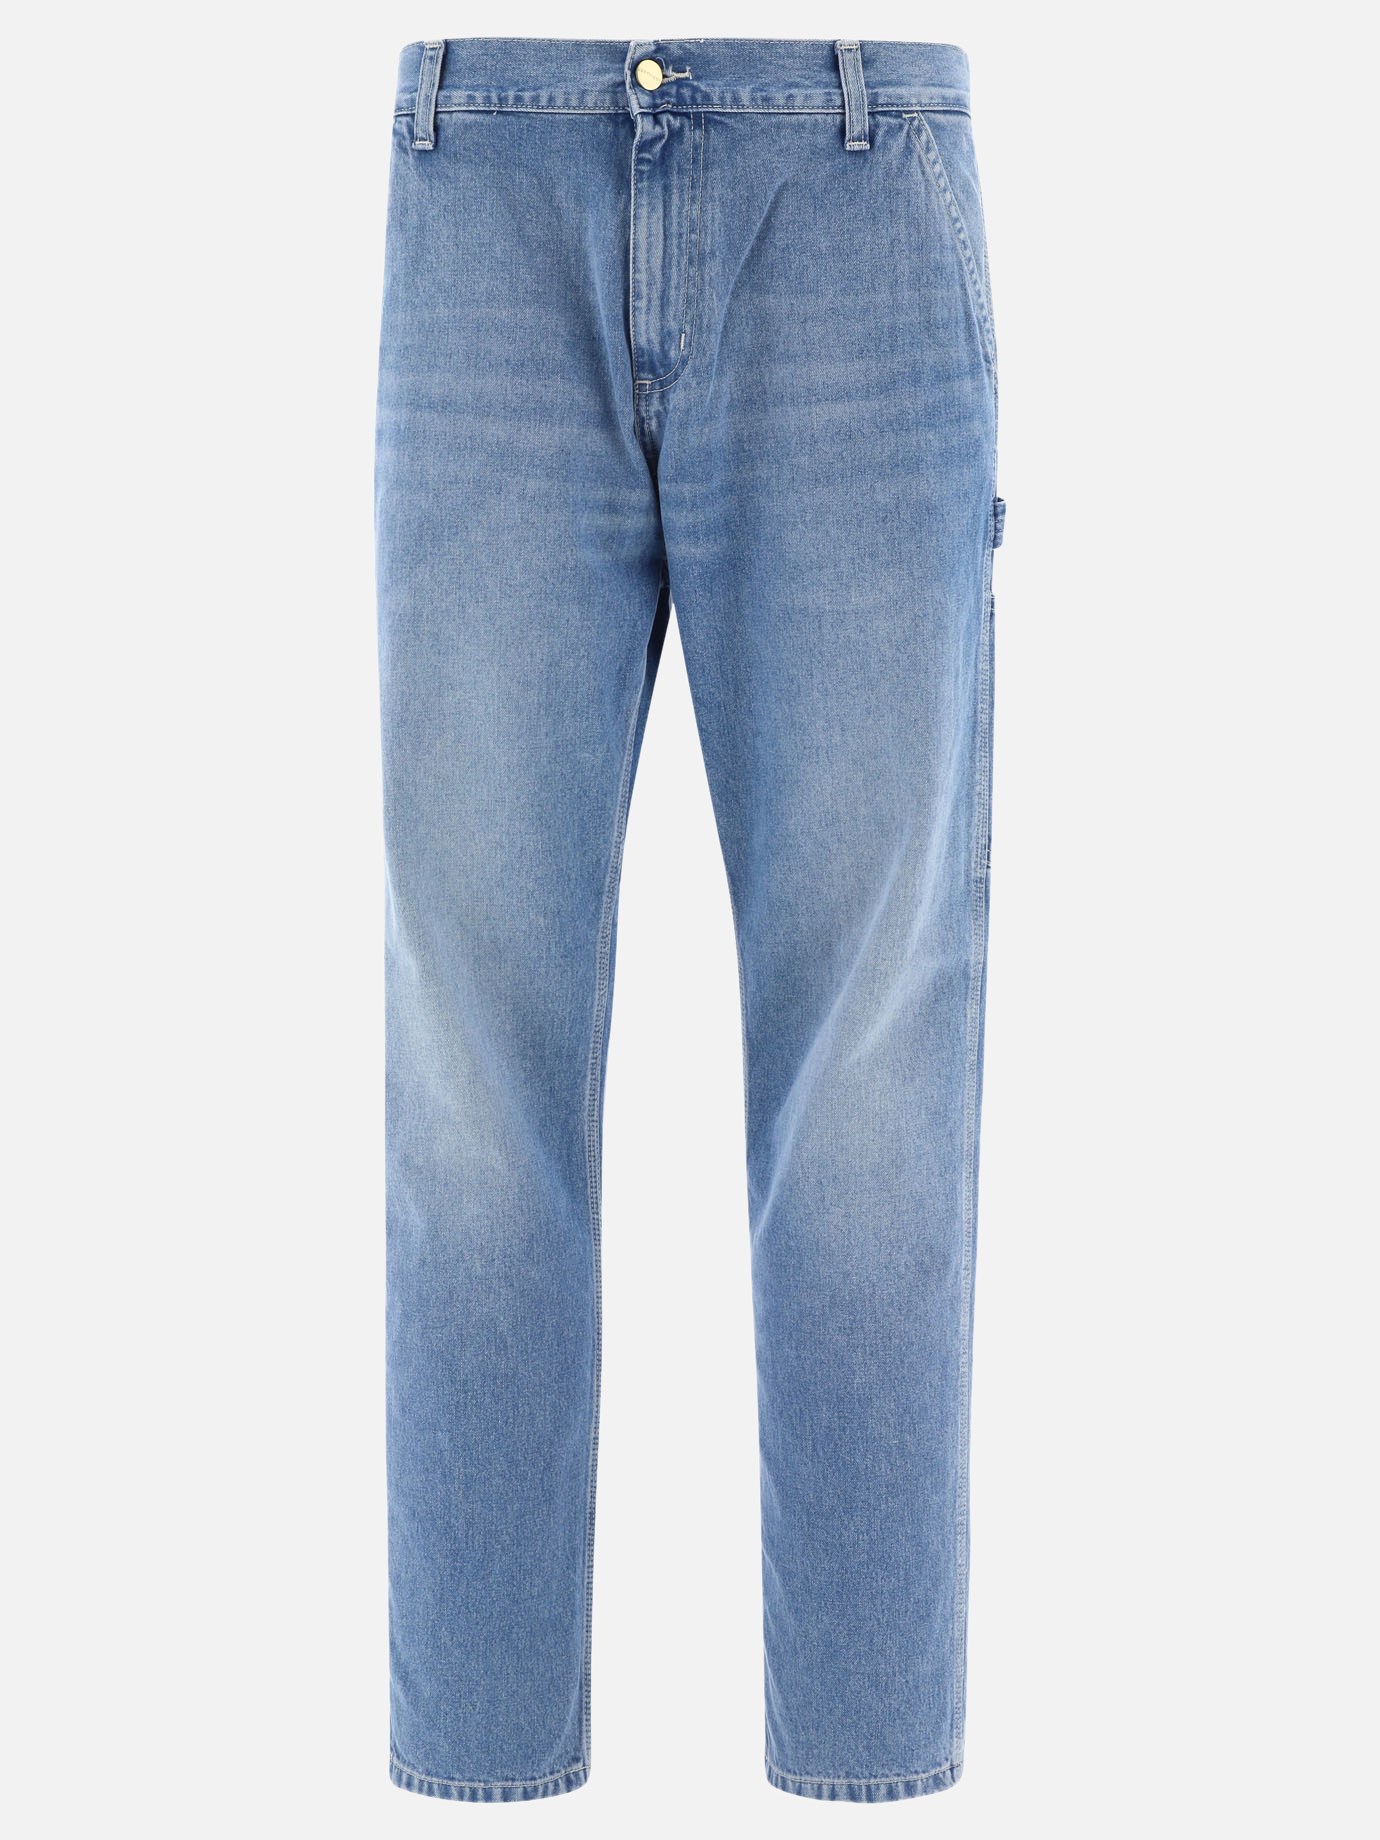 Jeans  Ruck Single Knee by Carhartt WIP - 2